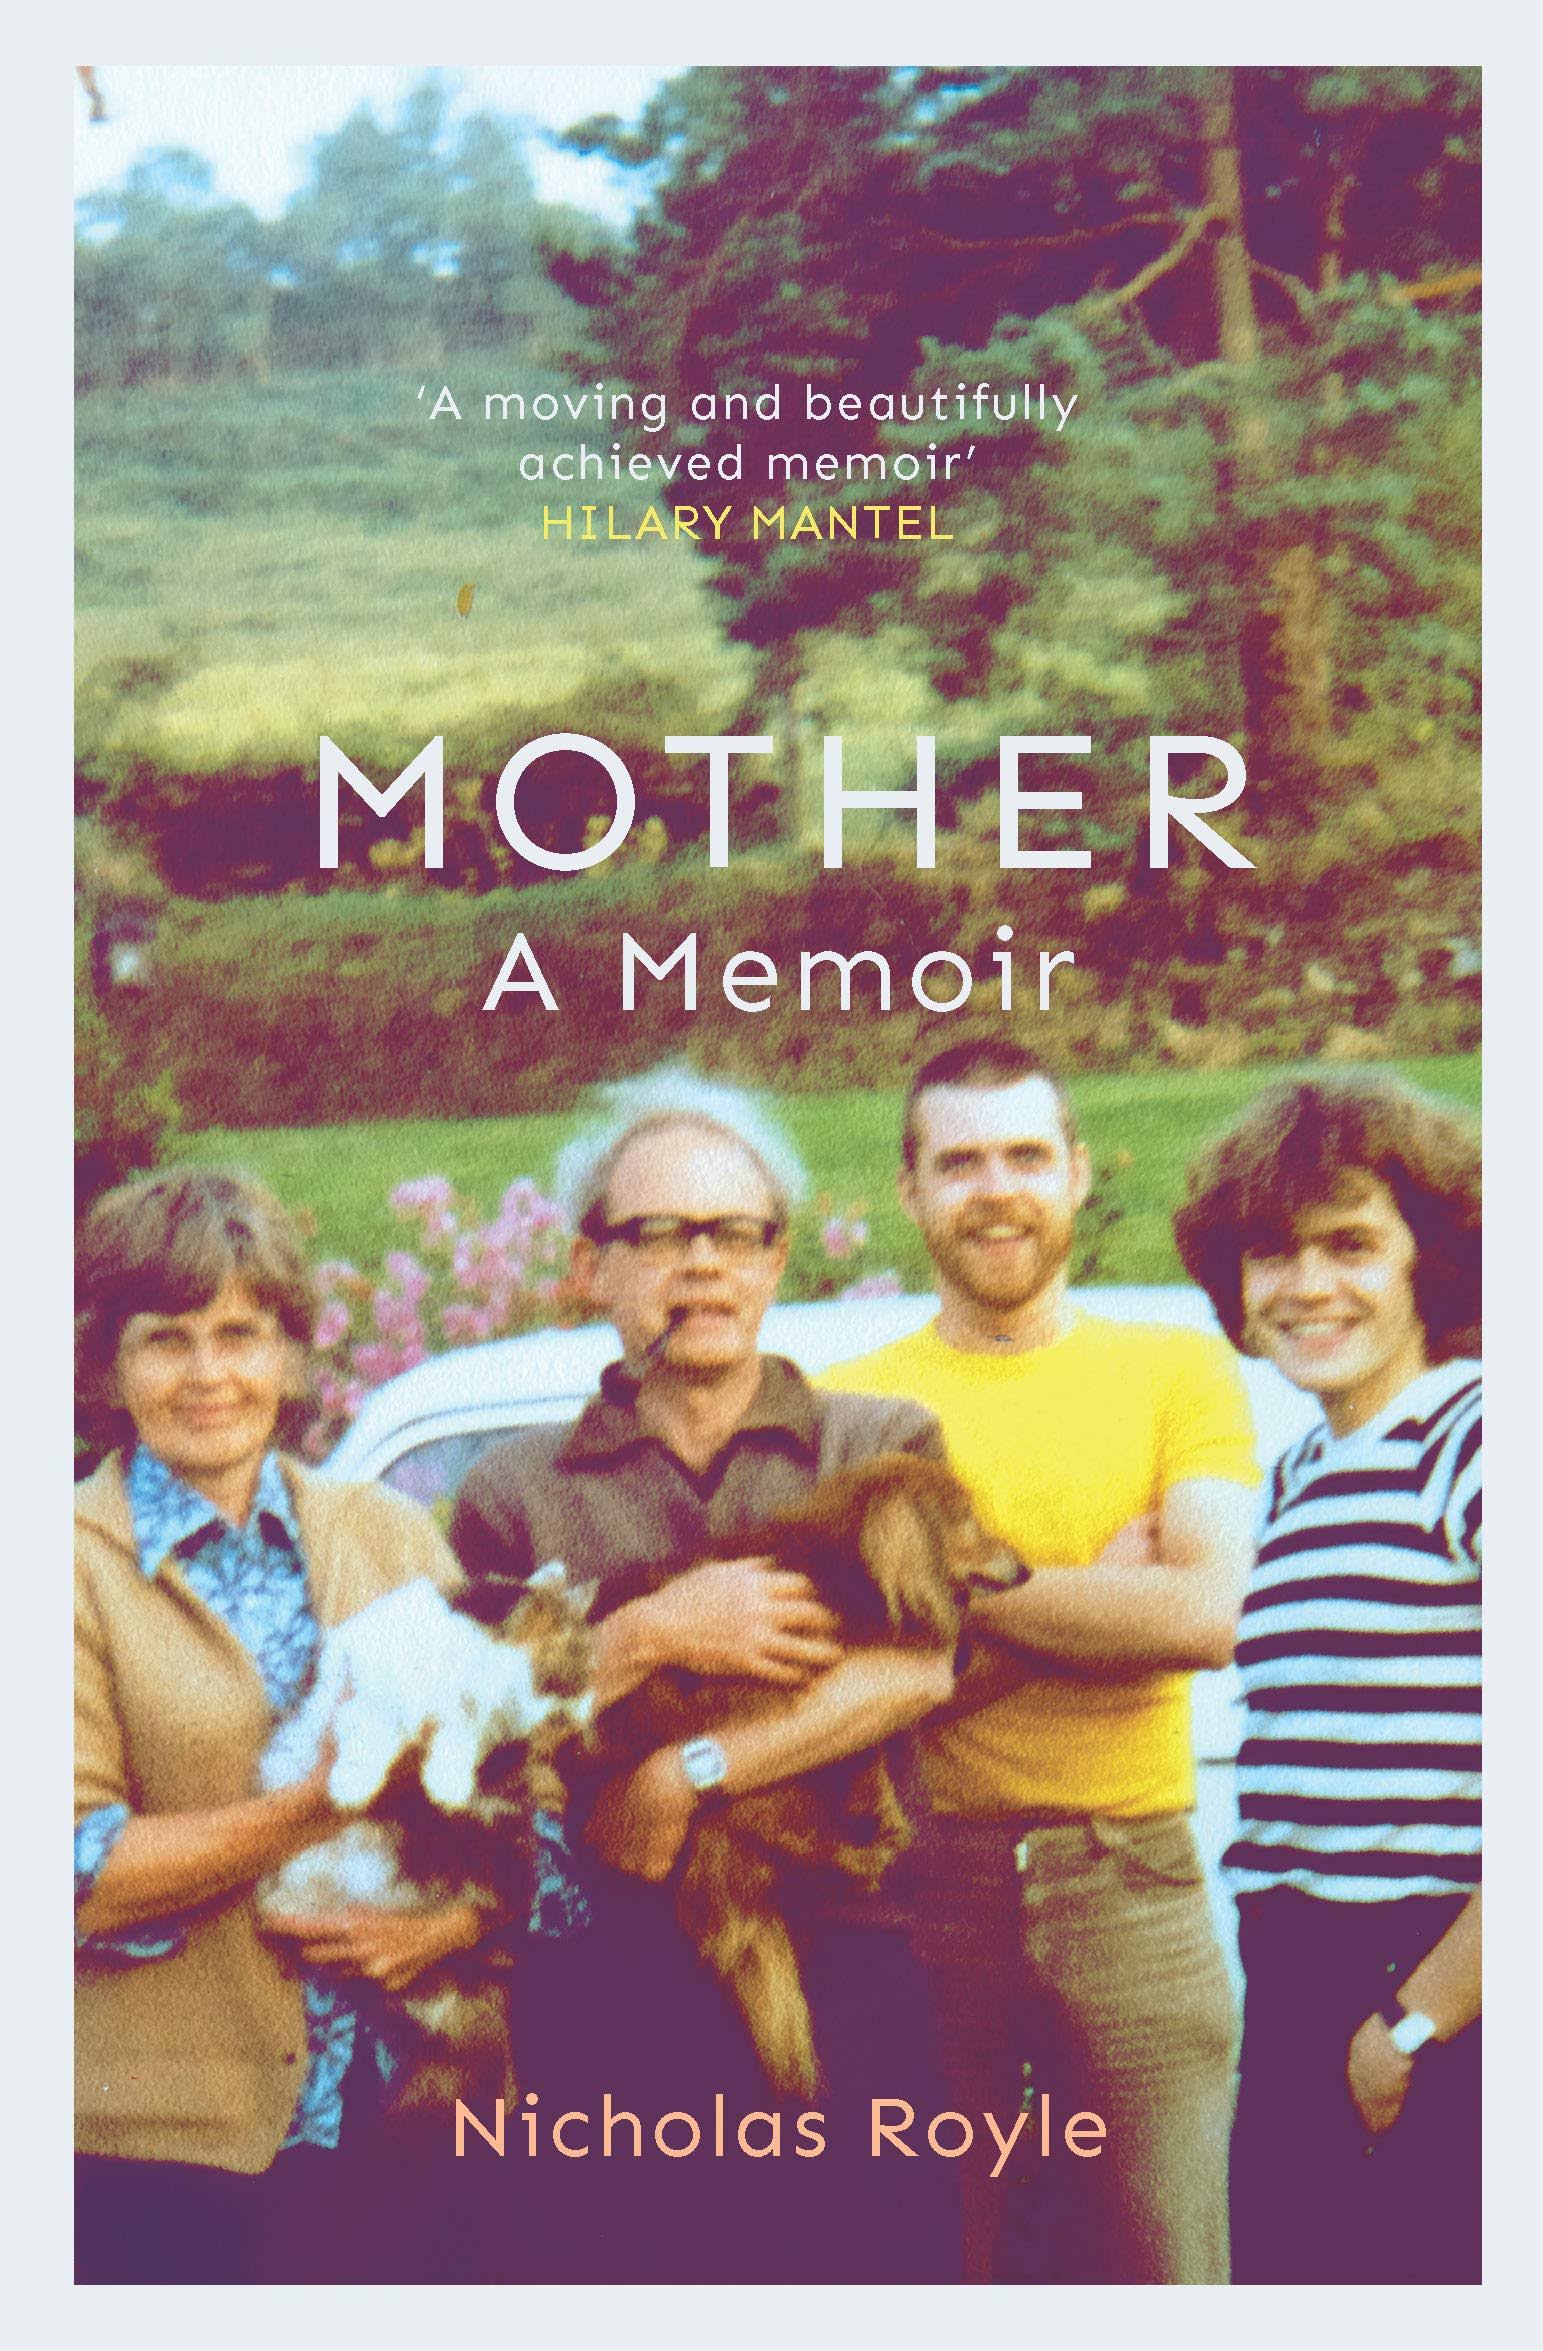 Mother: A Memoir [Book]